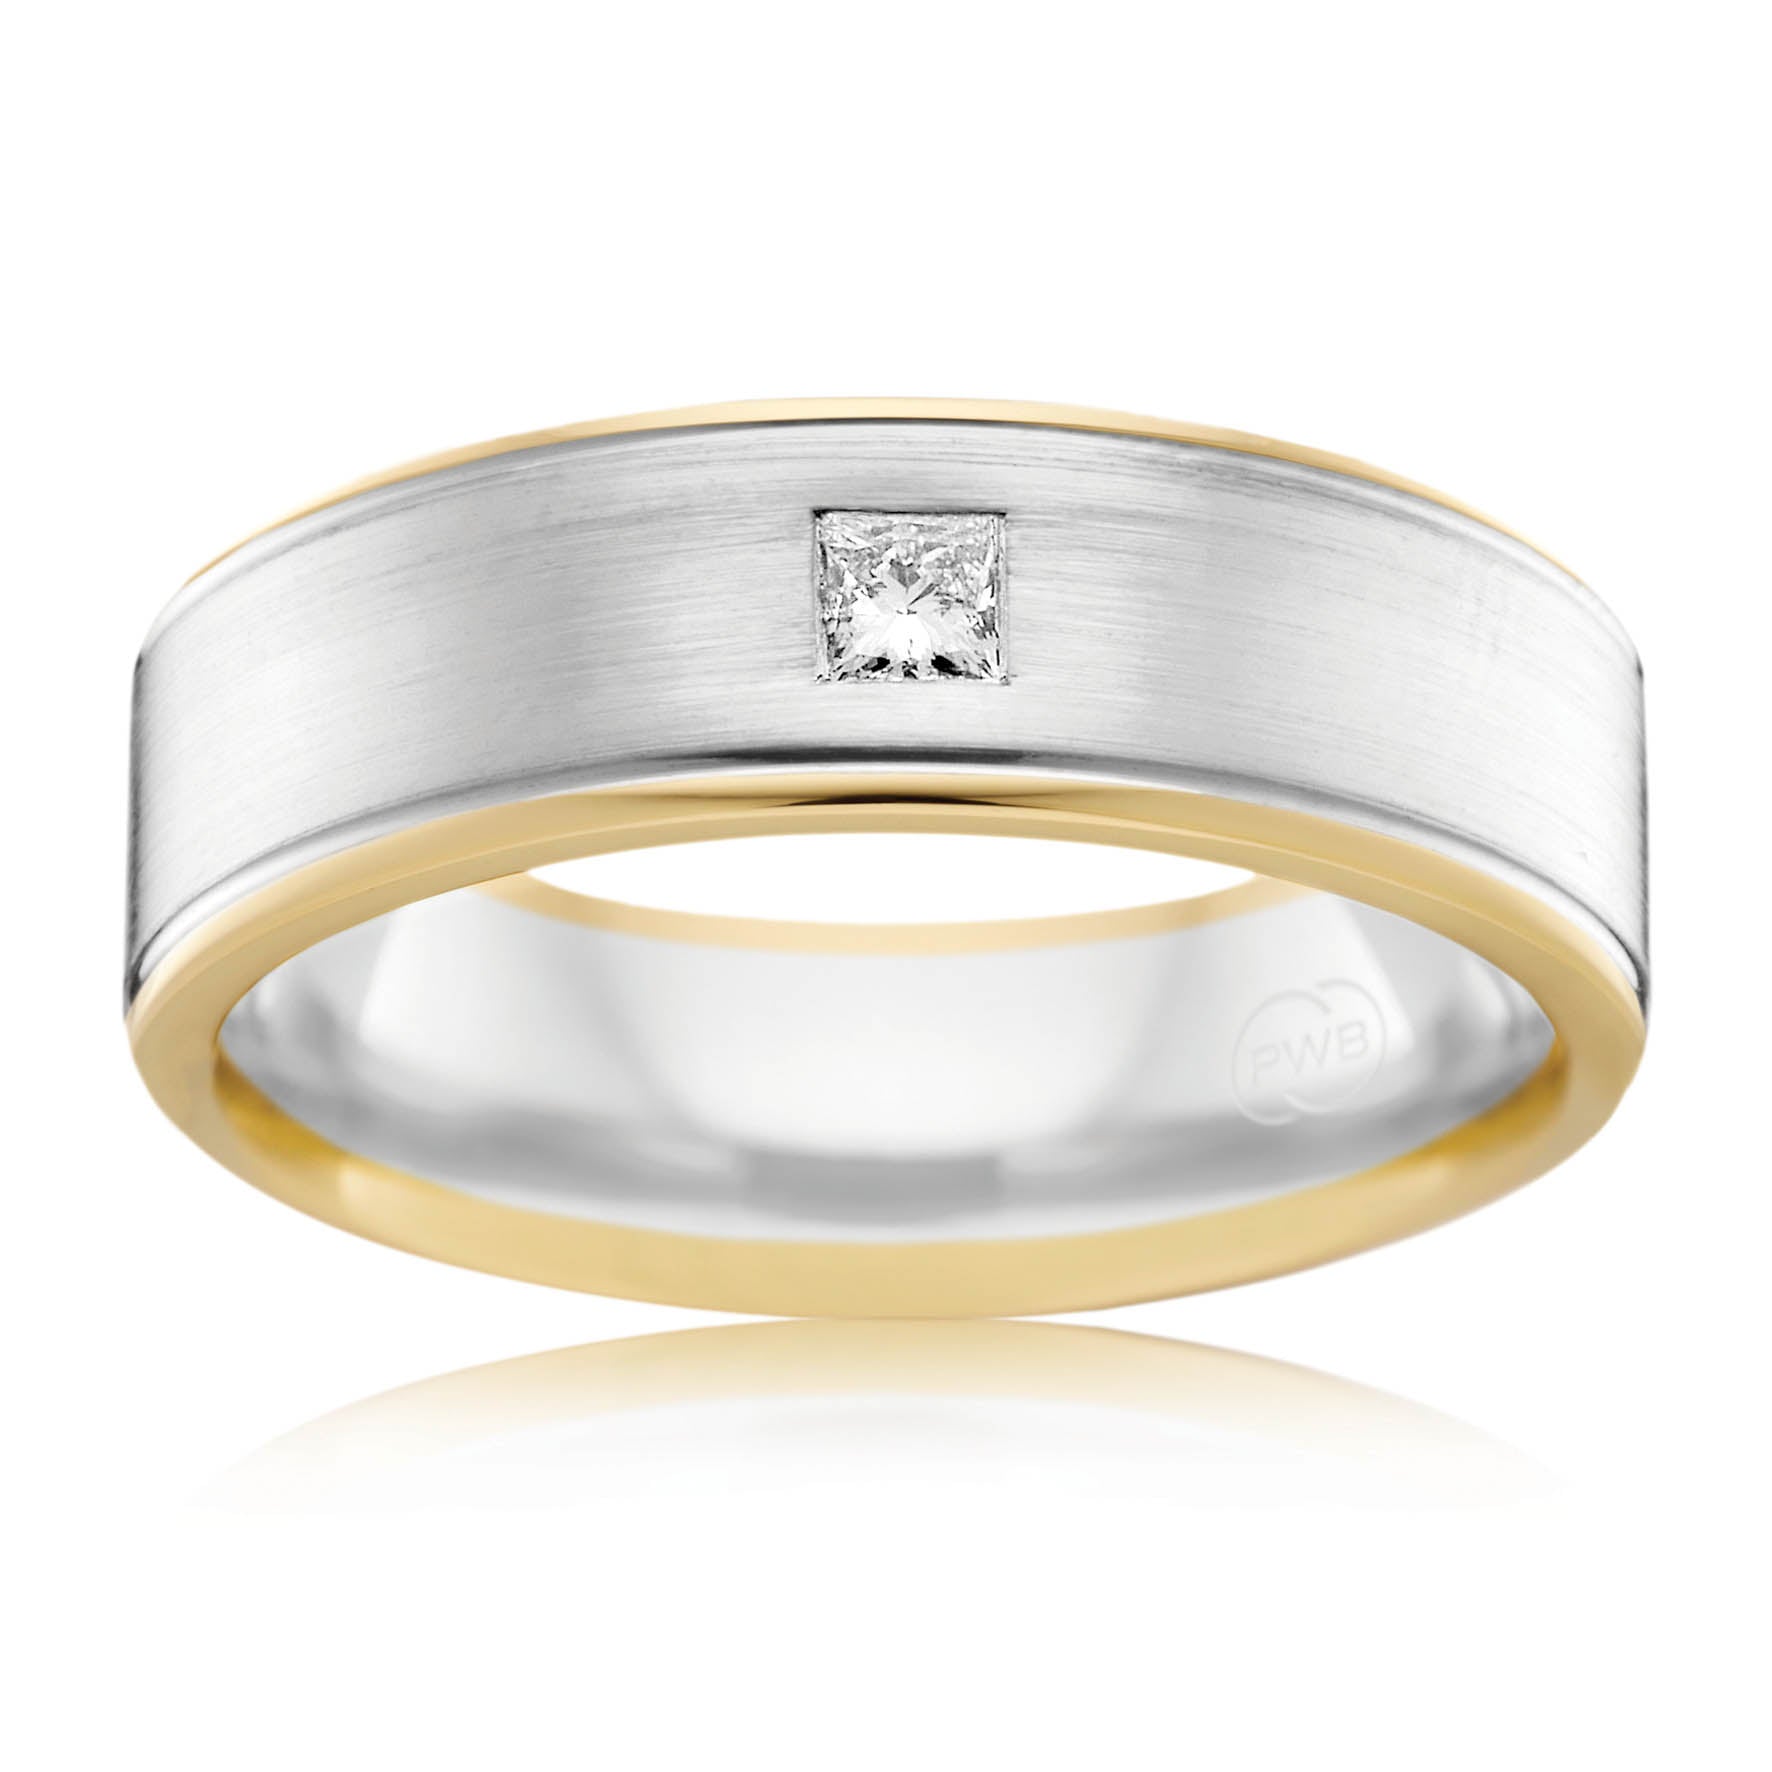 Two-tone Gents Wedding Ring with 0.10 carat Princess-cut Diamond.